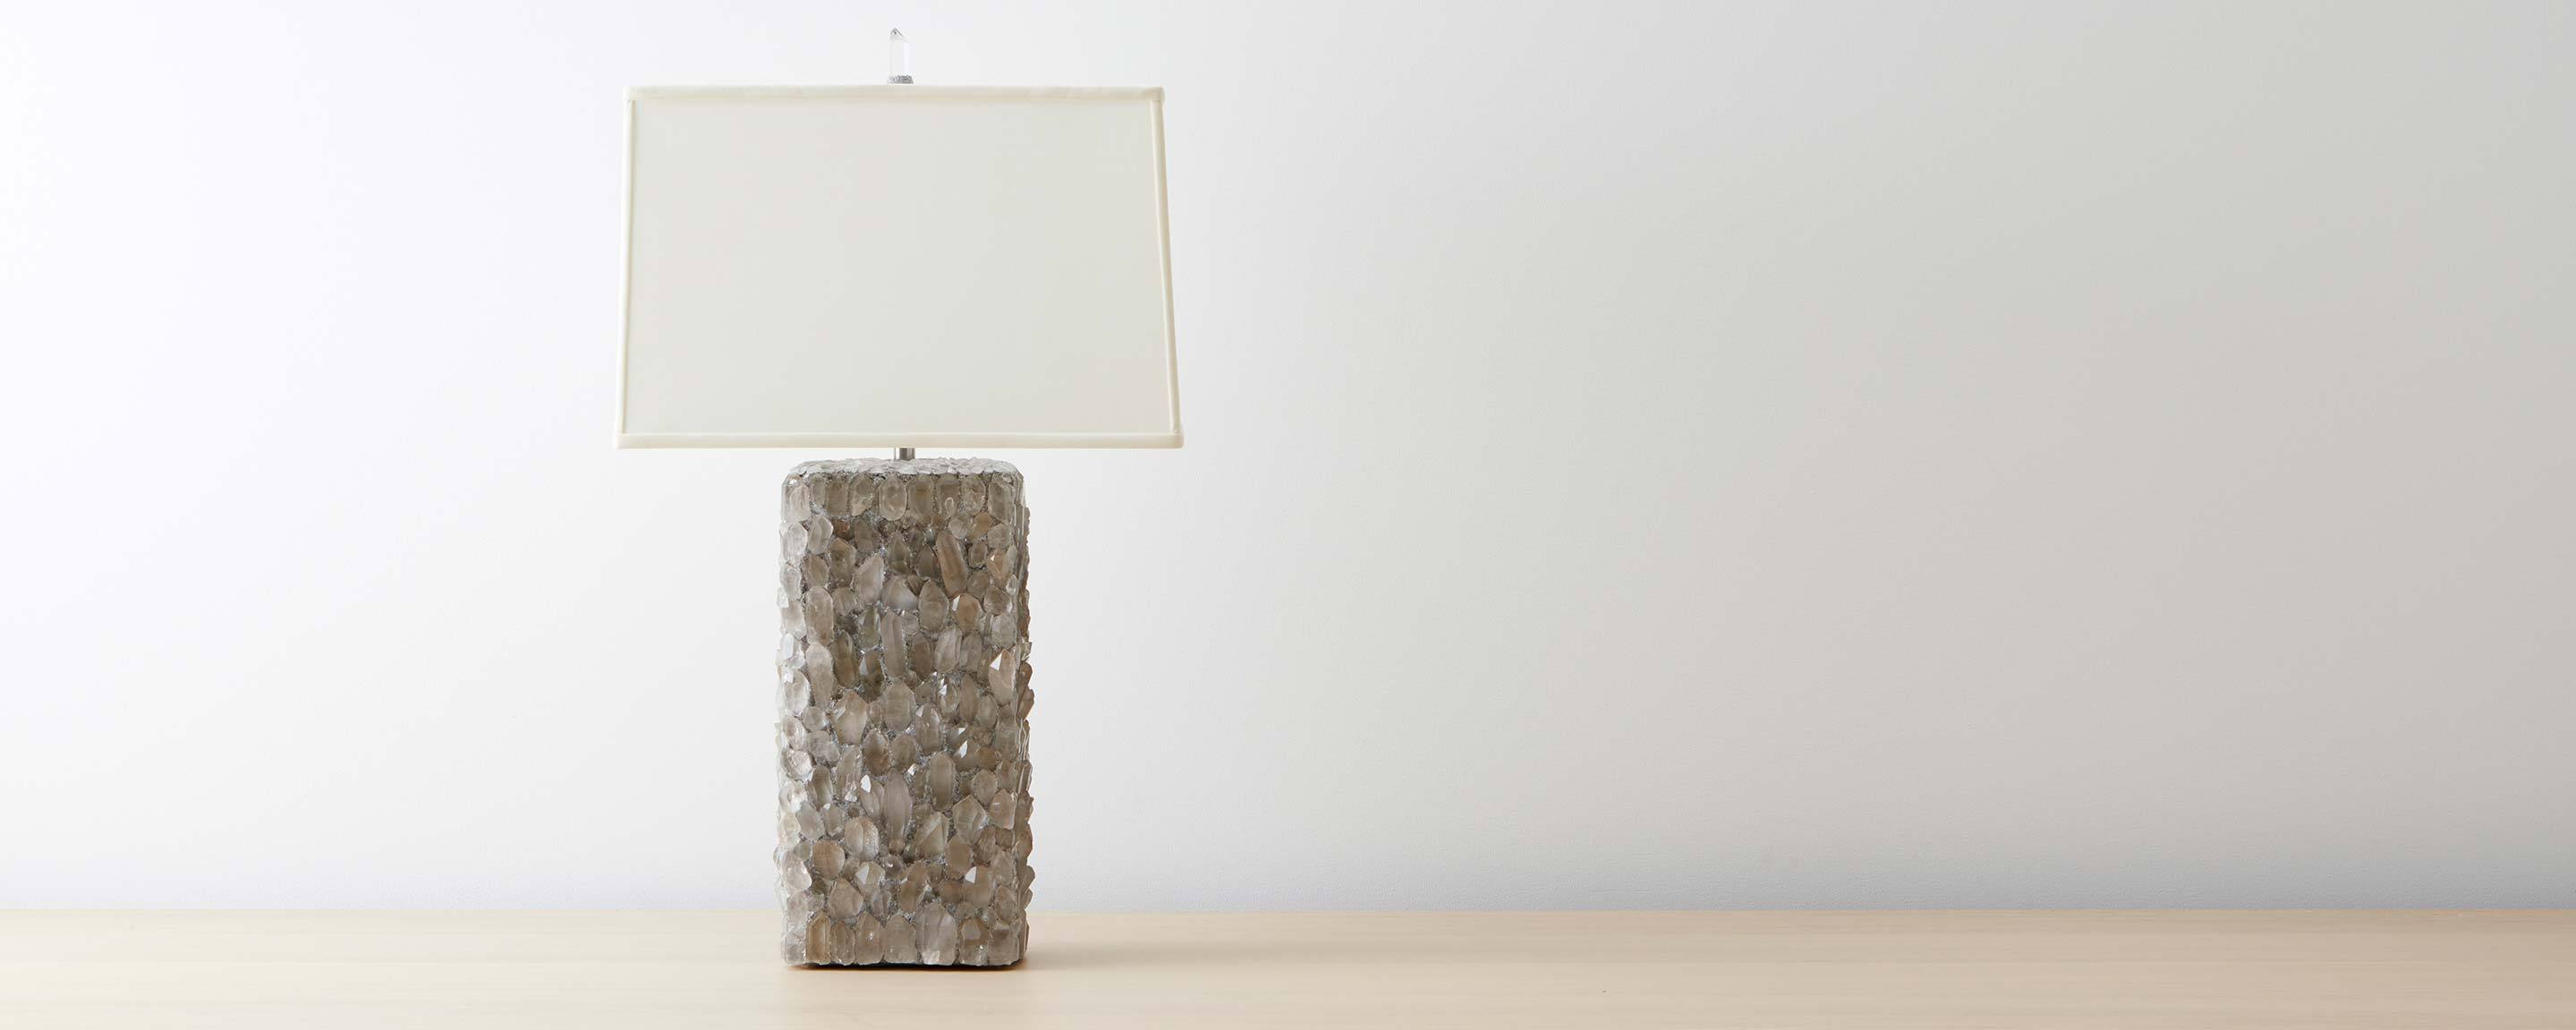 grey quartz crystal table lamp